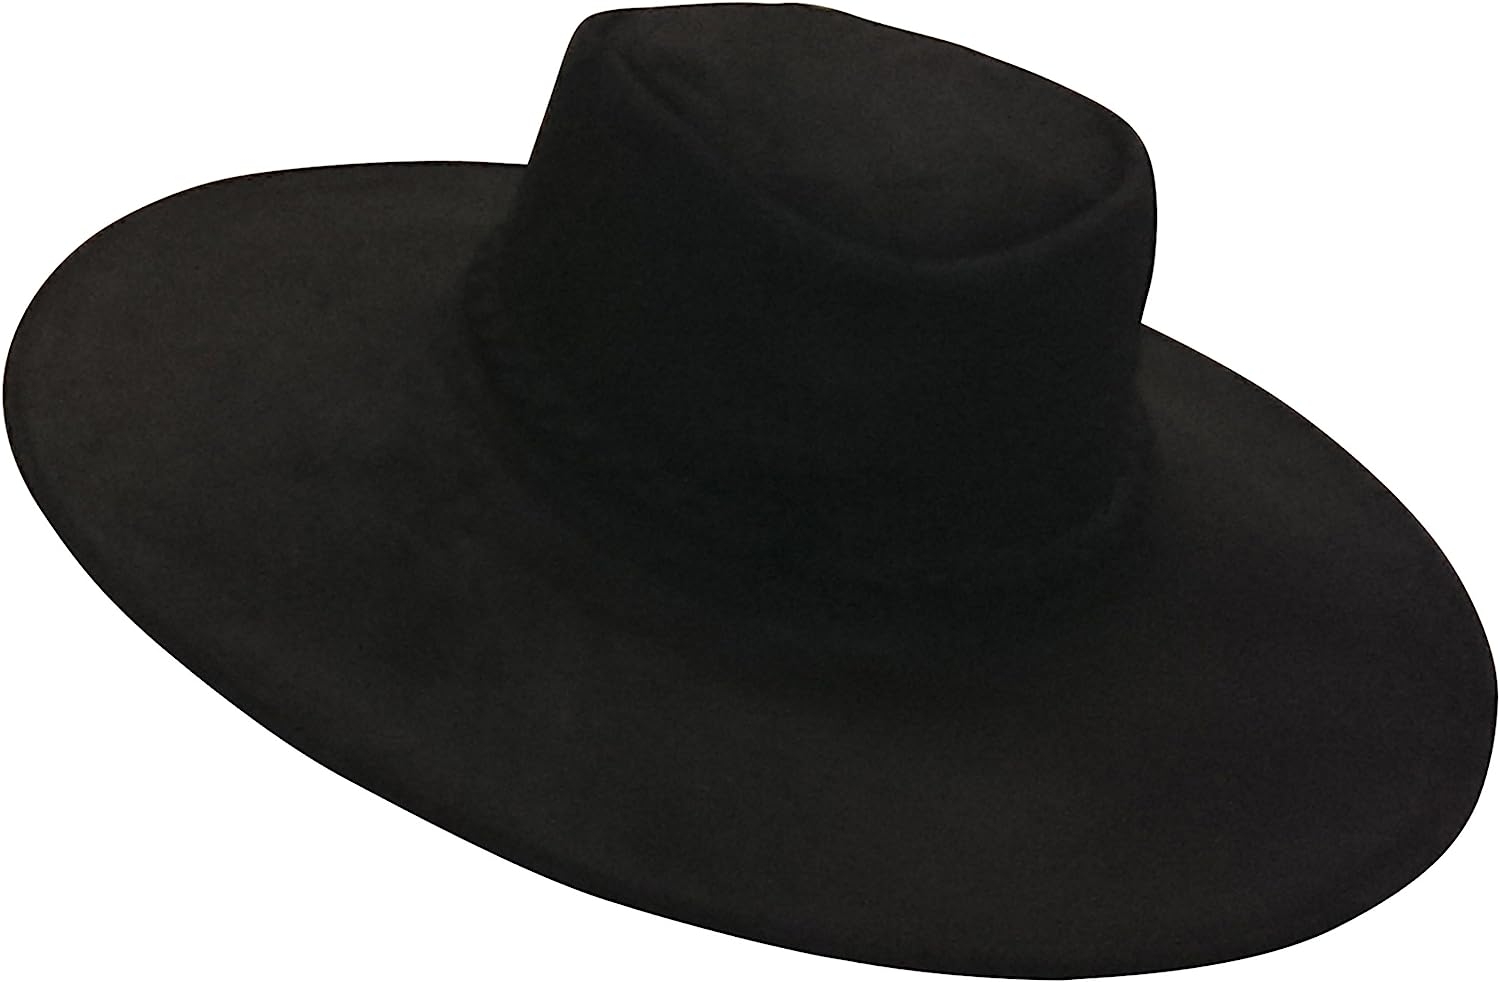 Sharpshooter High Plains Drifter Clint Eastwood Bounty Hunter Black Leather Hat   price checker   price checker Description